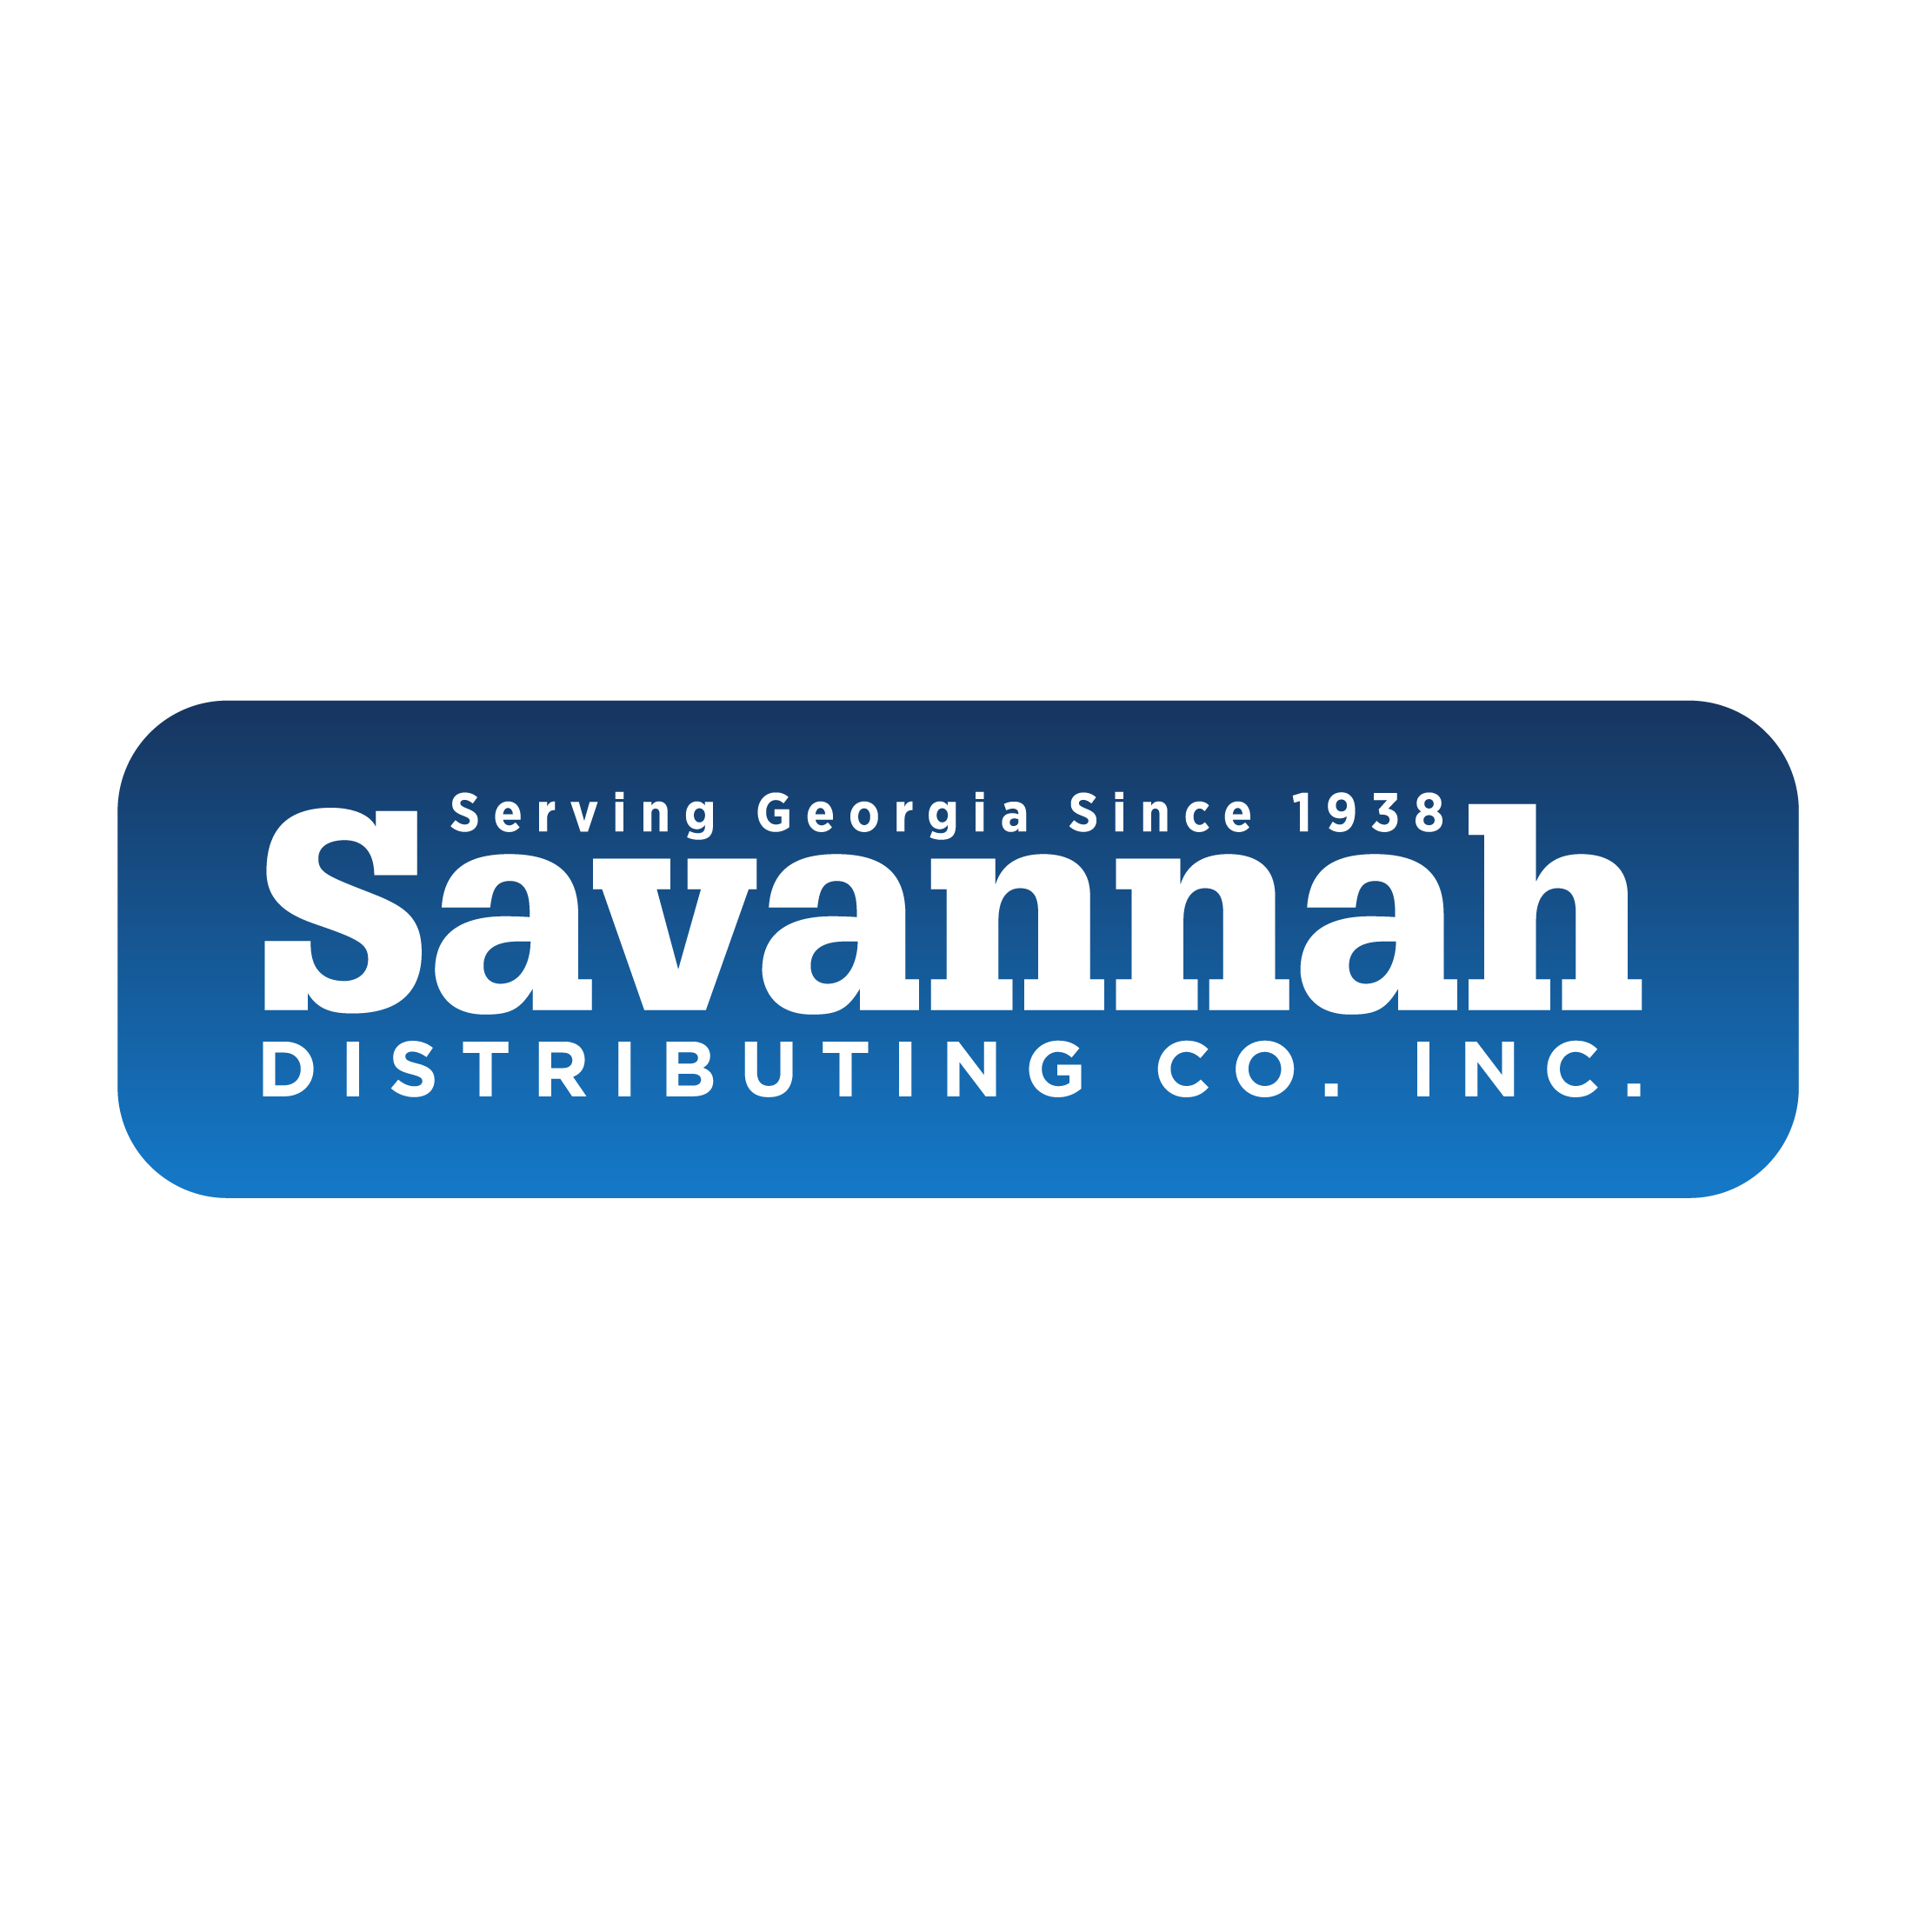 Savannah Distributing Co. | Proud sponsors of the Decatur Arts Festival